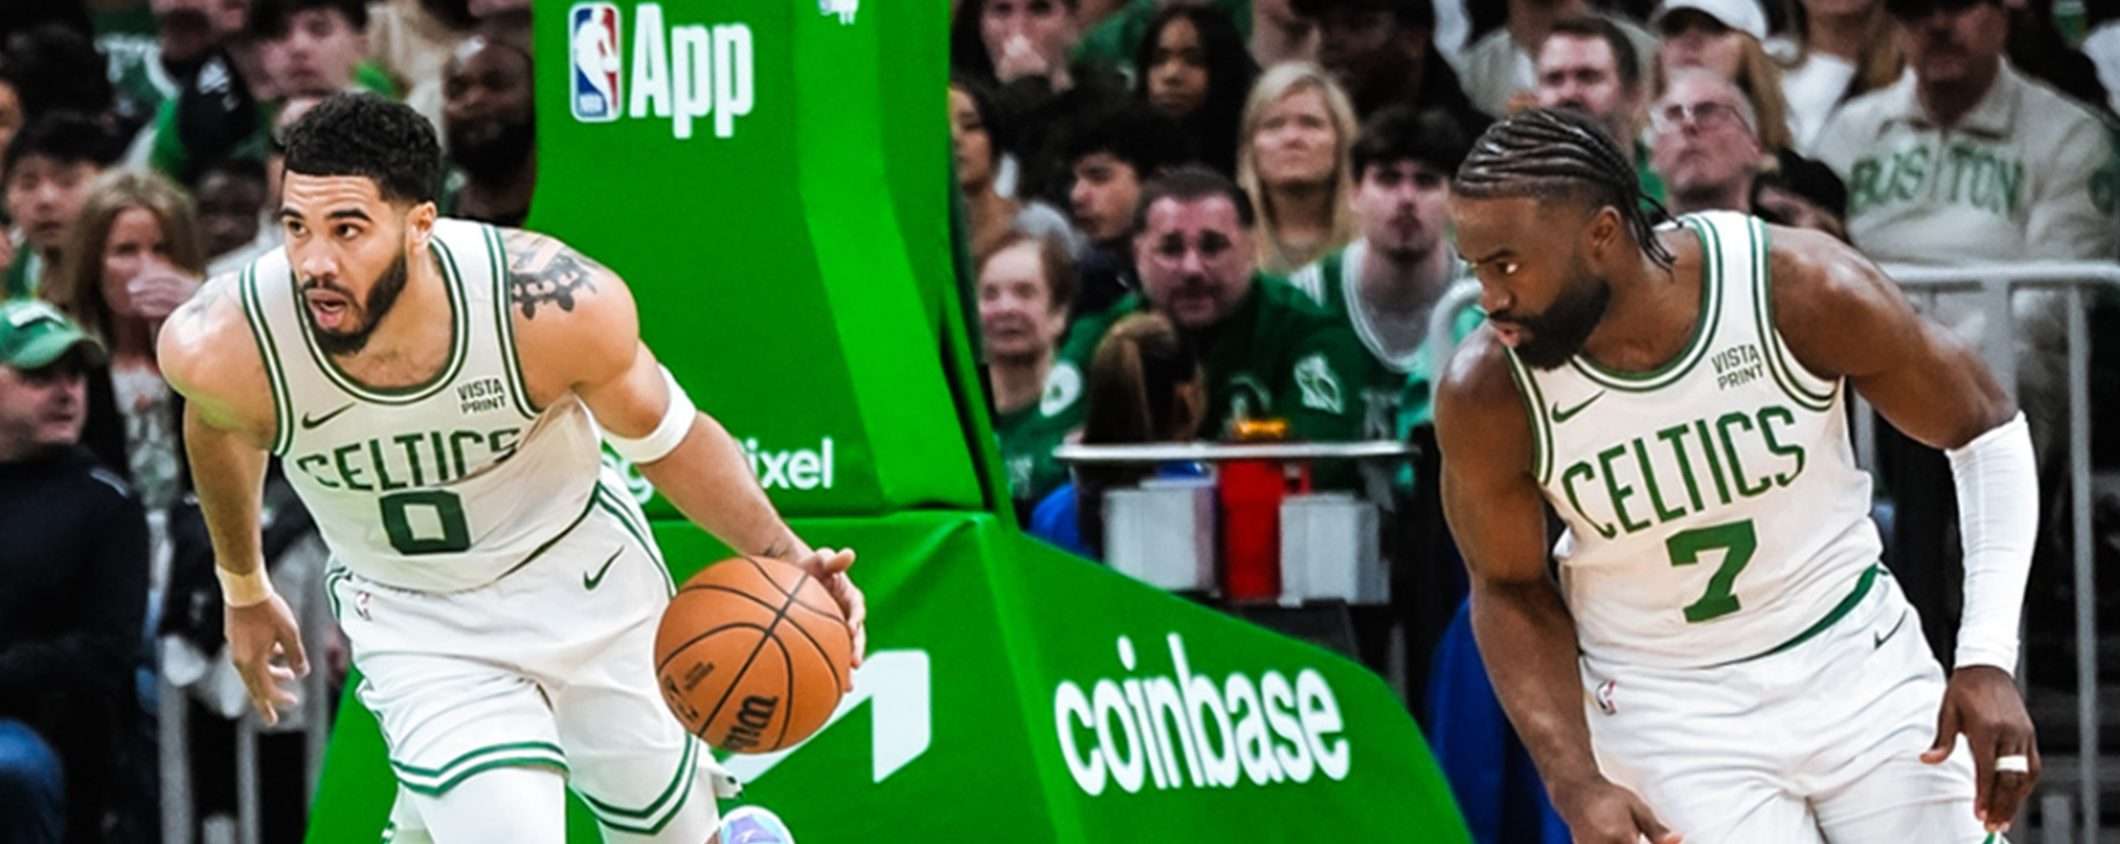 Playoff Nba, Celtics-Heat: dove vederla in diretta TV